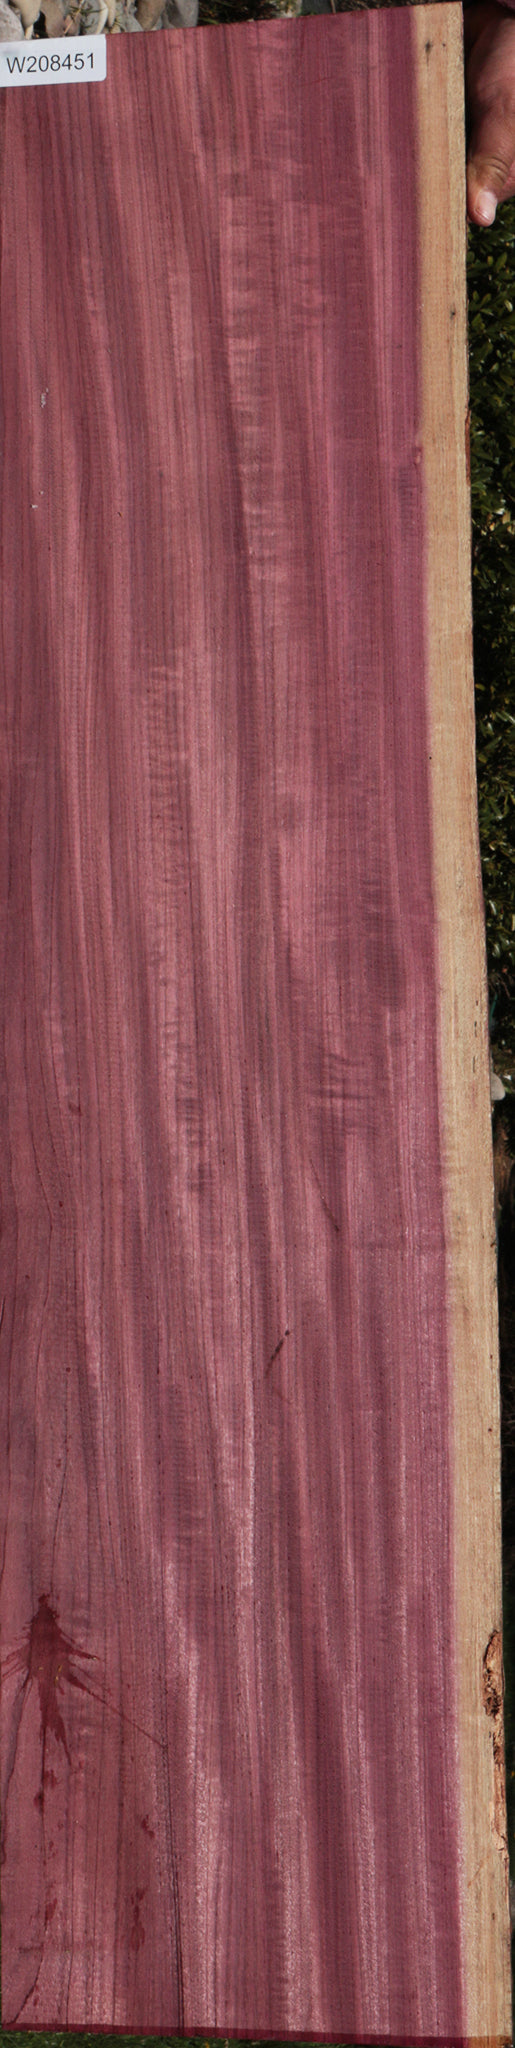 Purpleheart Live Edge Lumber